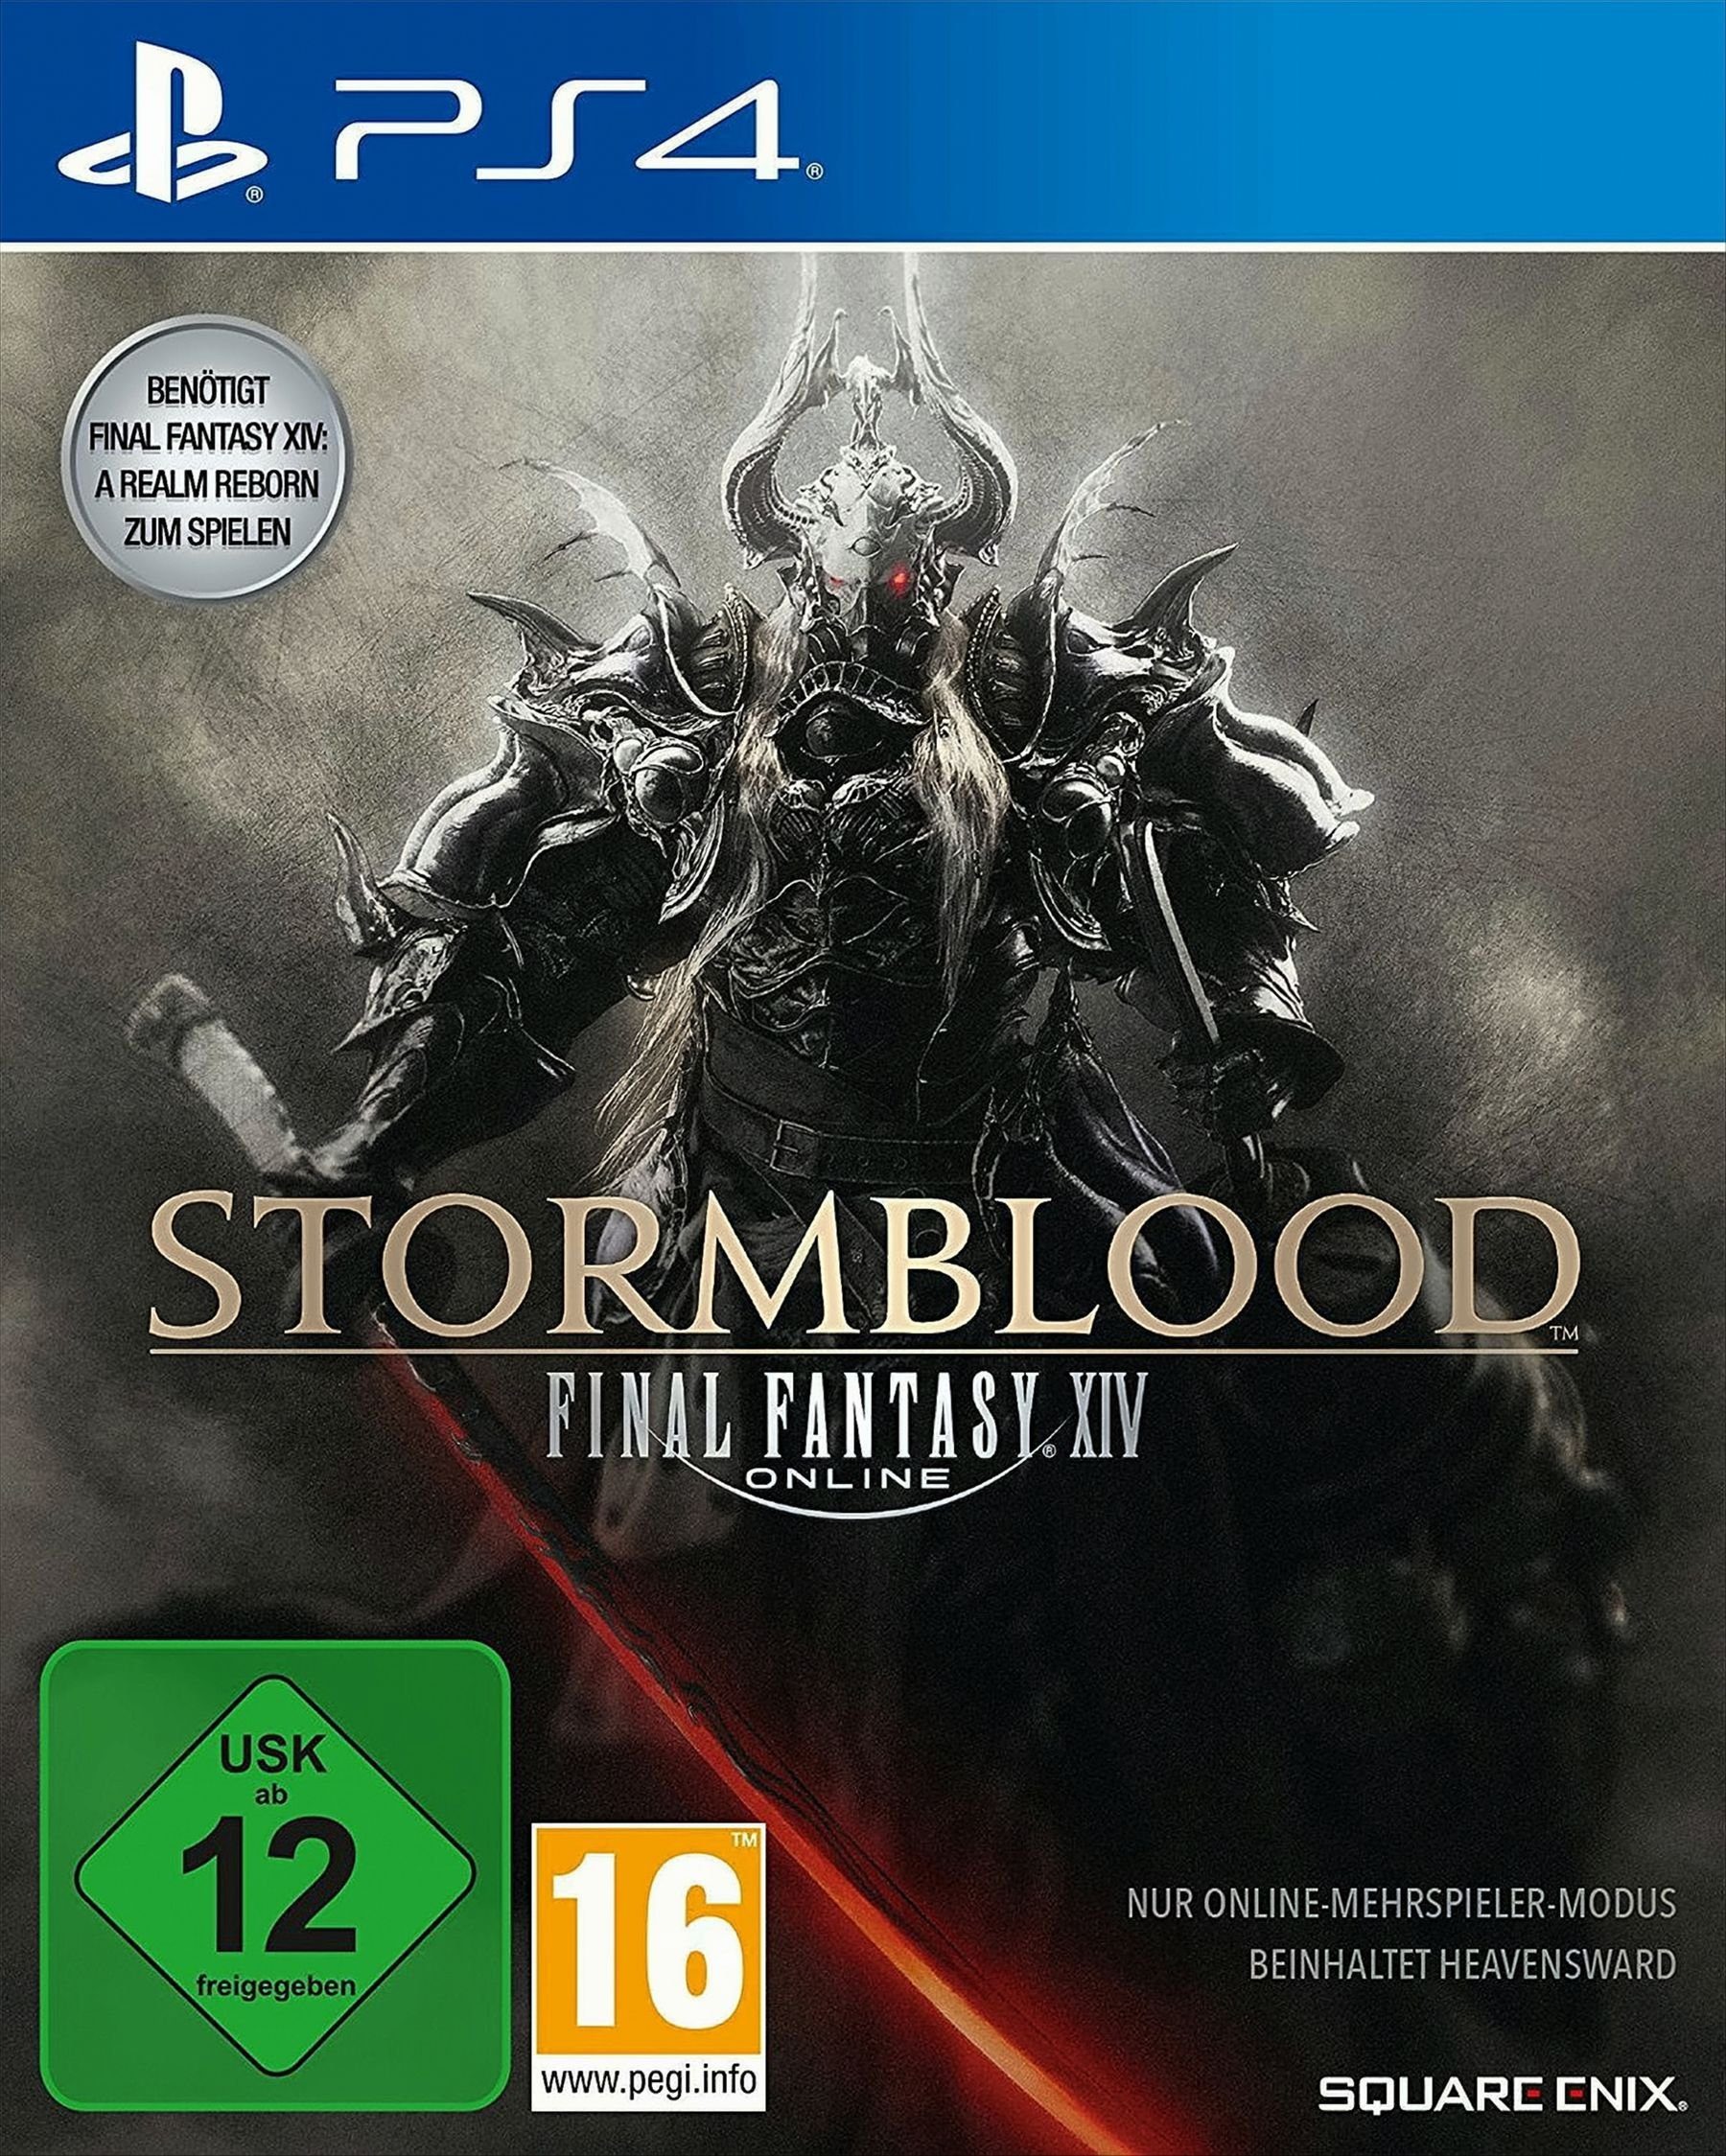 Final Fantasy XIV Online: Stormblood Playstation 4